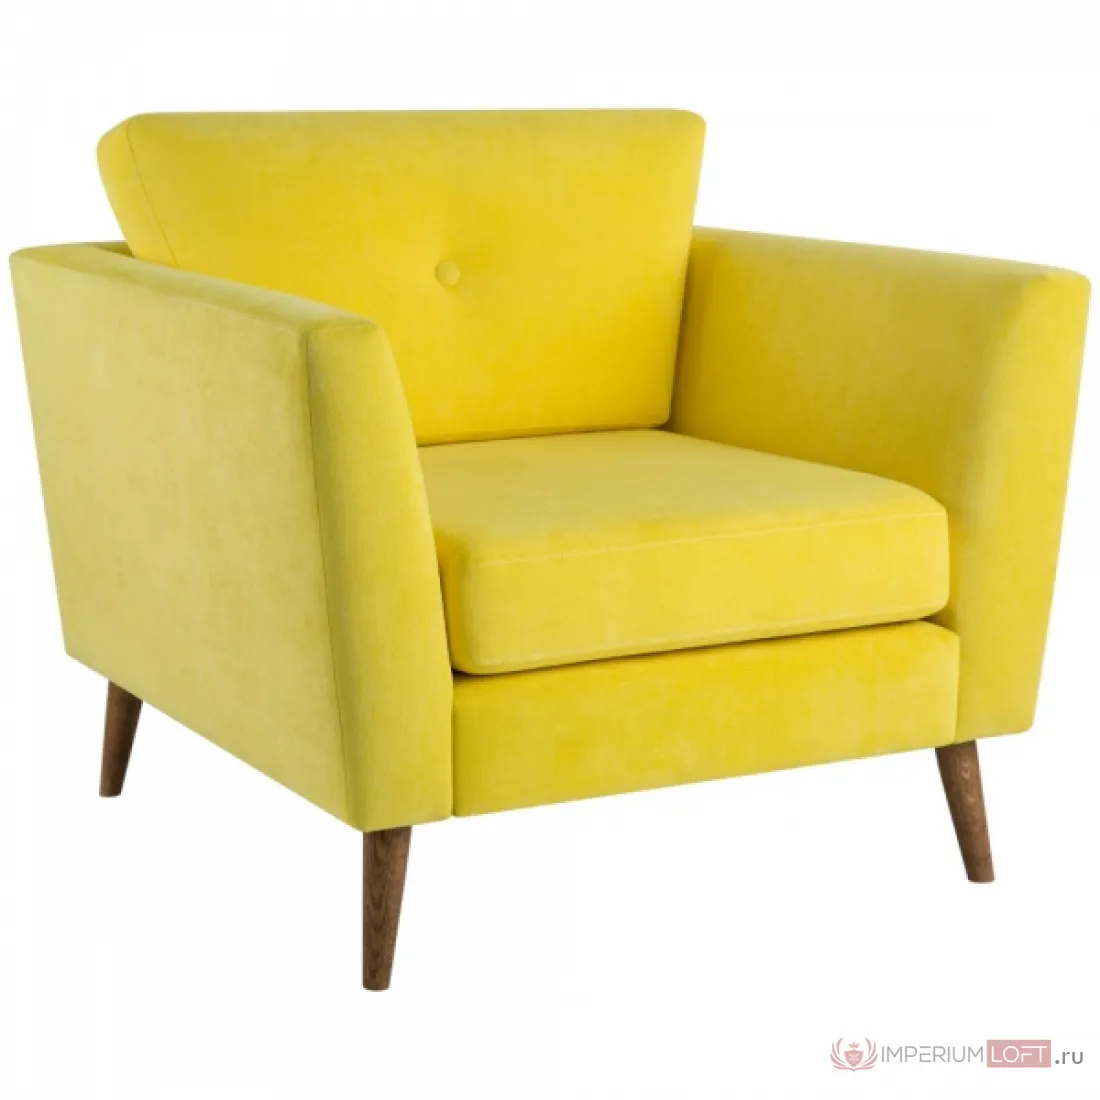 Yellow chair